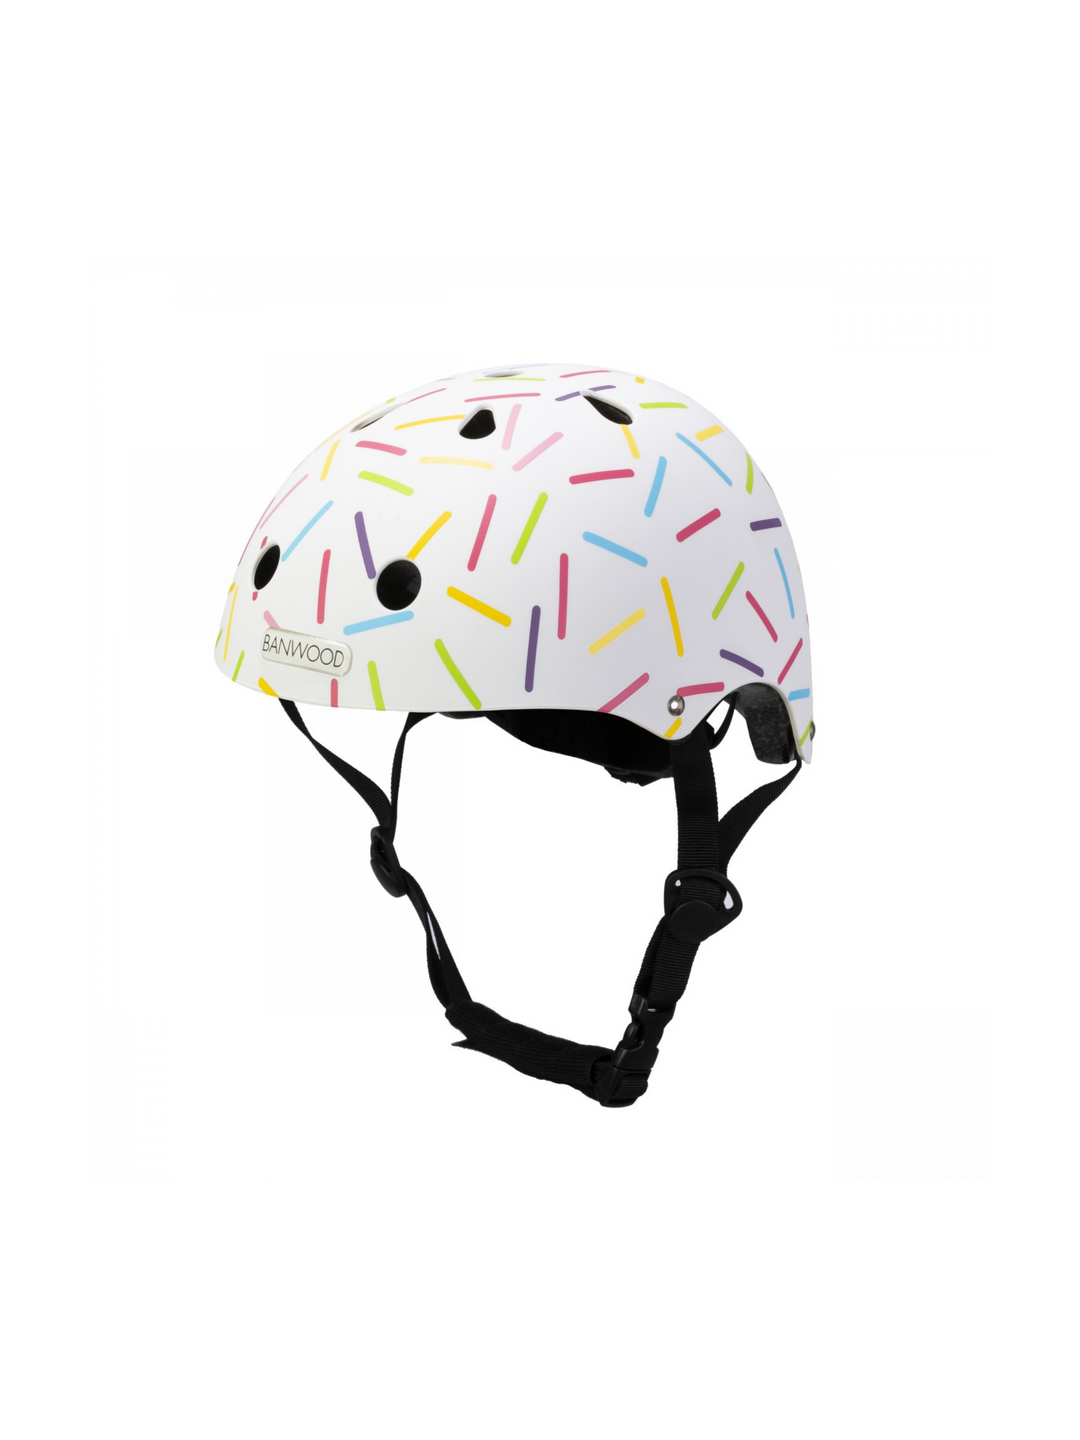 Banwood x Marest Helmet - Allegra White